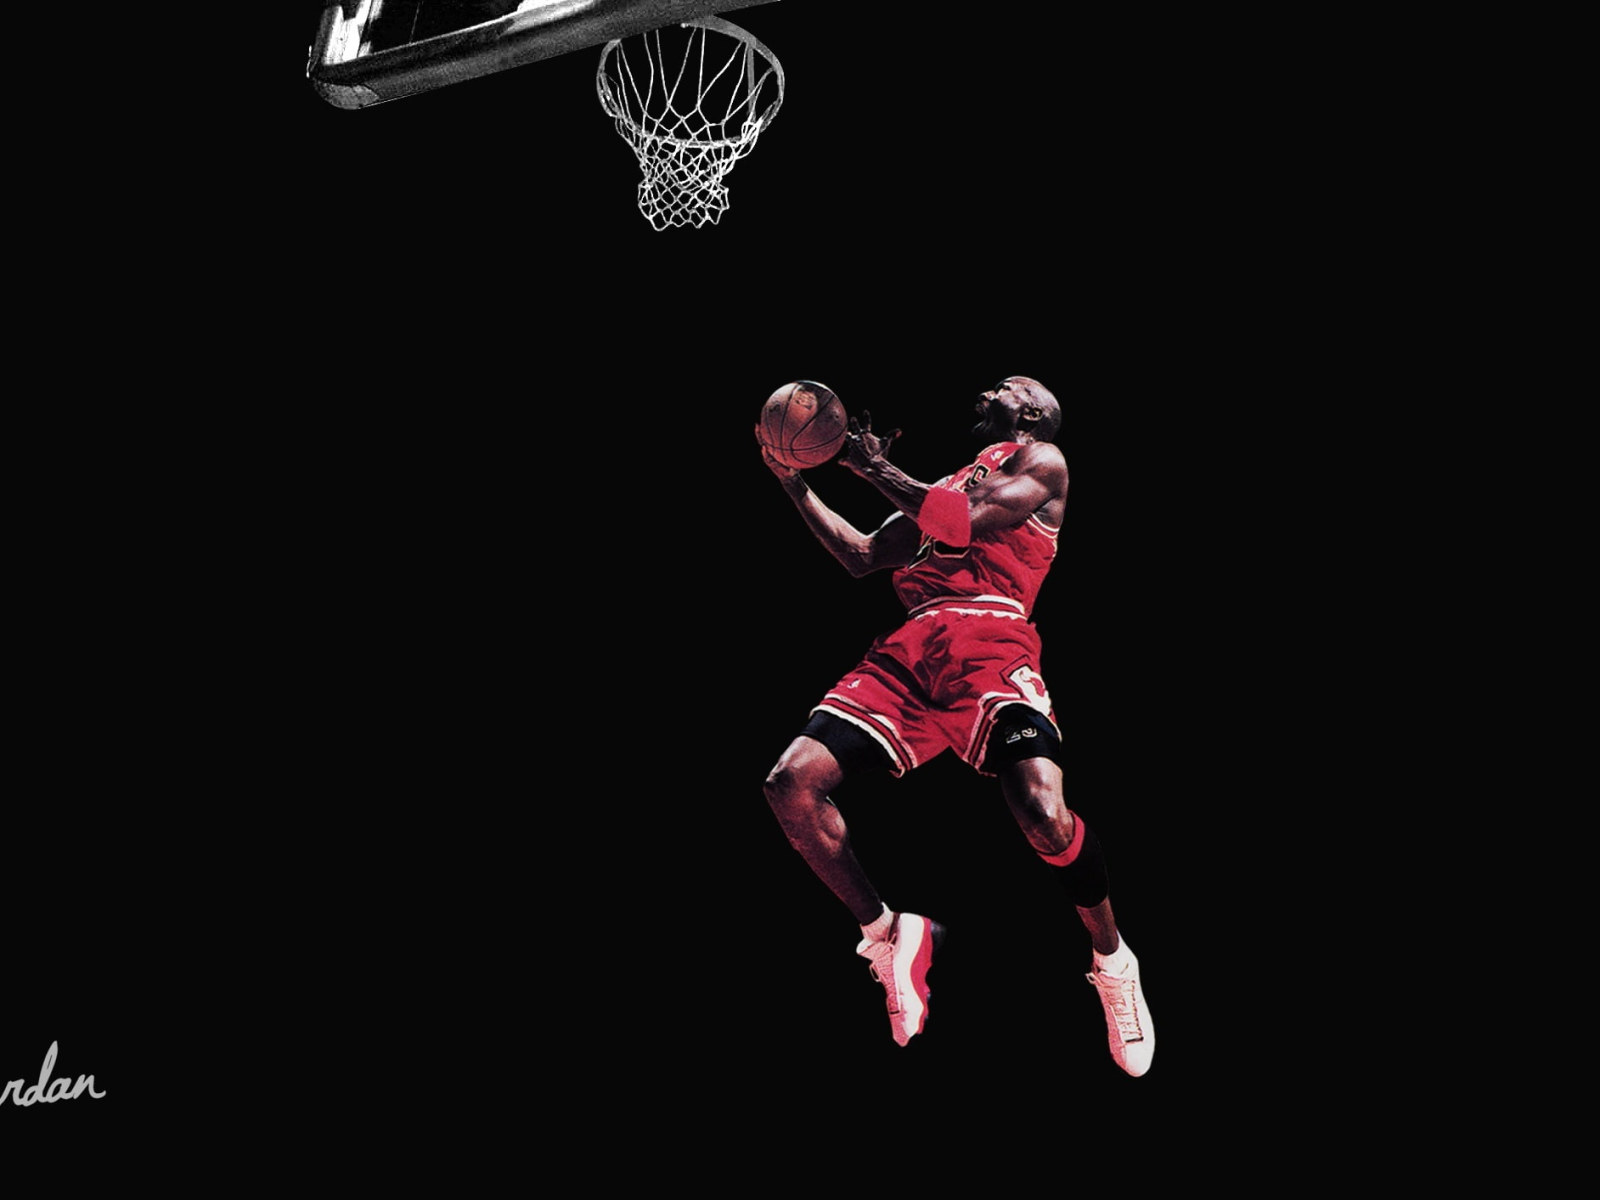 Michael Jordan Clean, Michael Jordan dunk wallpaper, Sports, Basketball wallpaper • Wallpaper For You HD Wallpaper For Desktop & Mobile